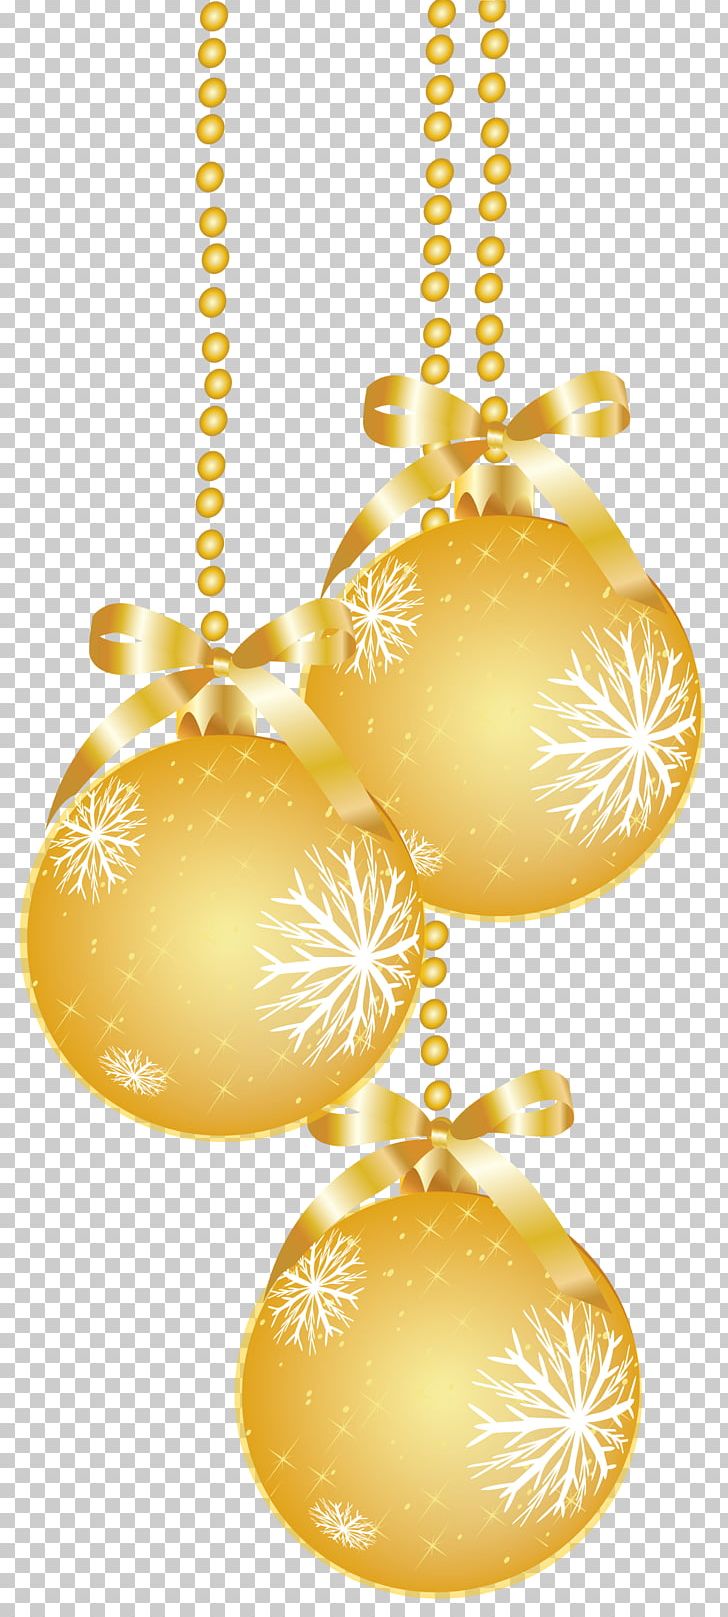 Bombka Christmas Ded Moroz Boules Boucherie Chanzy PNG, Clipart, Bombka, Boucherie Chanzy, Boules, Child, Christmas Free PNG Download